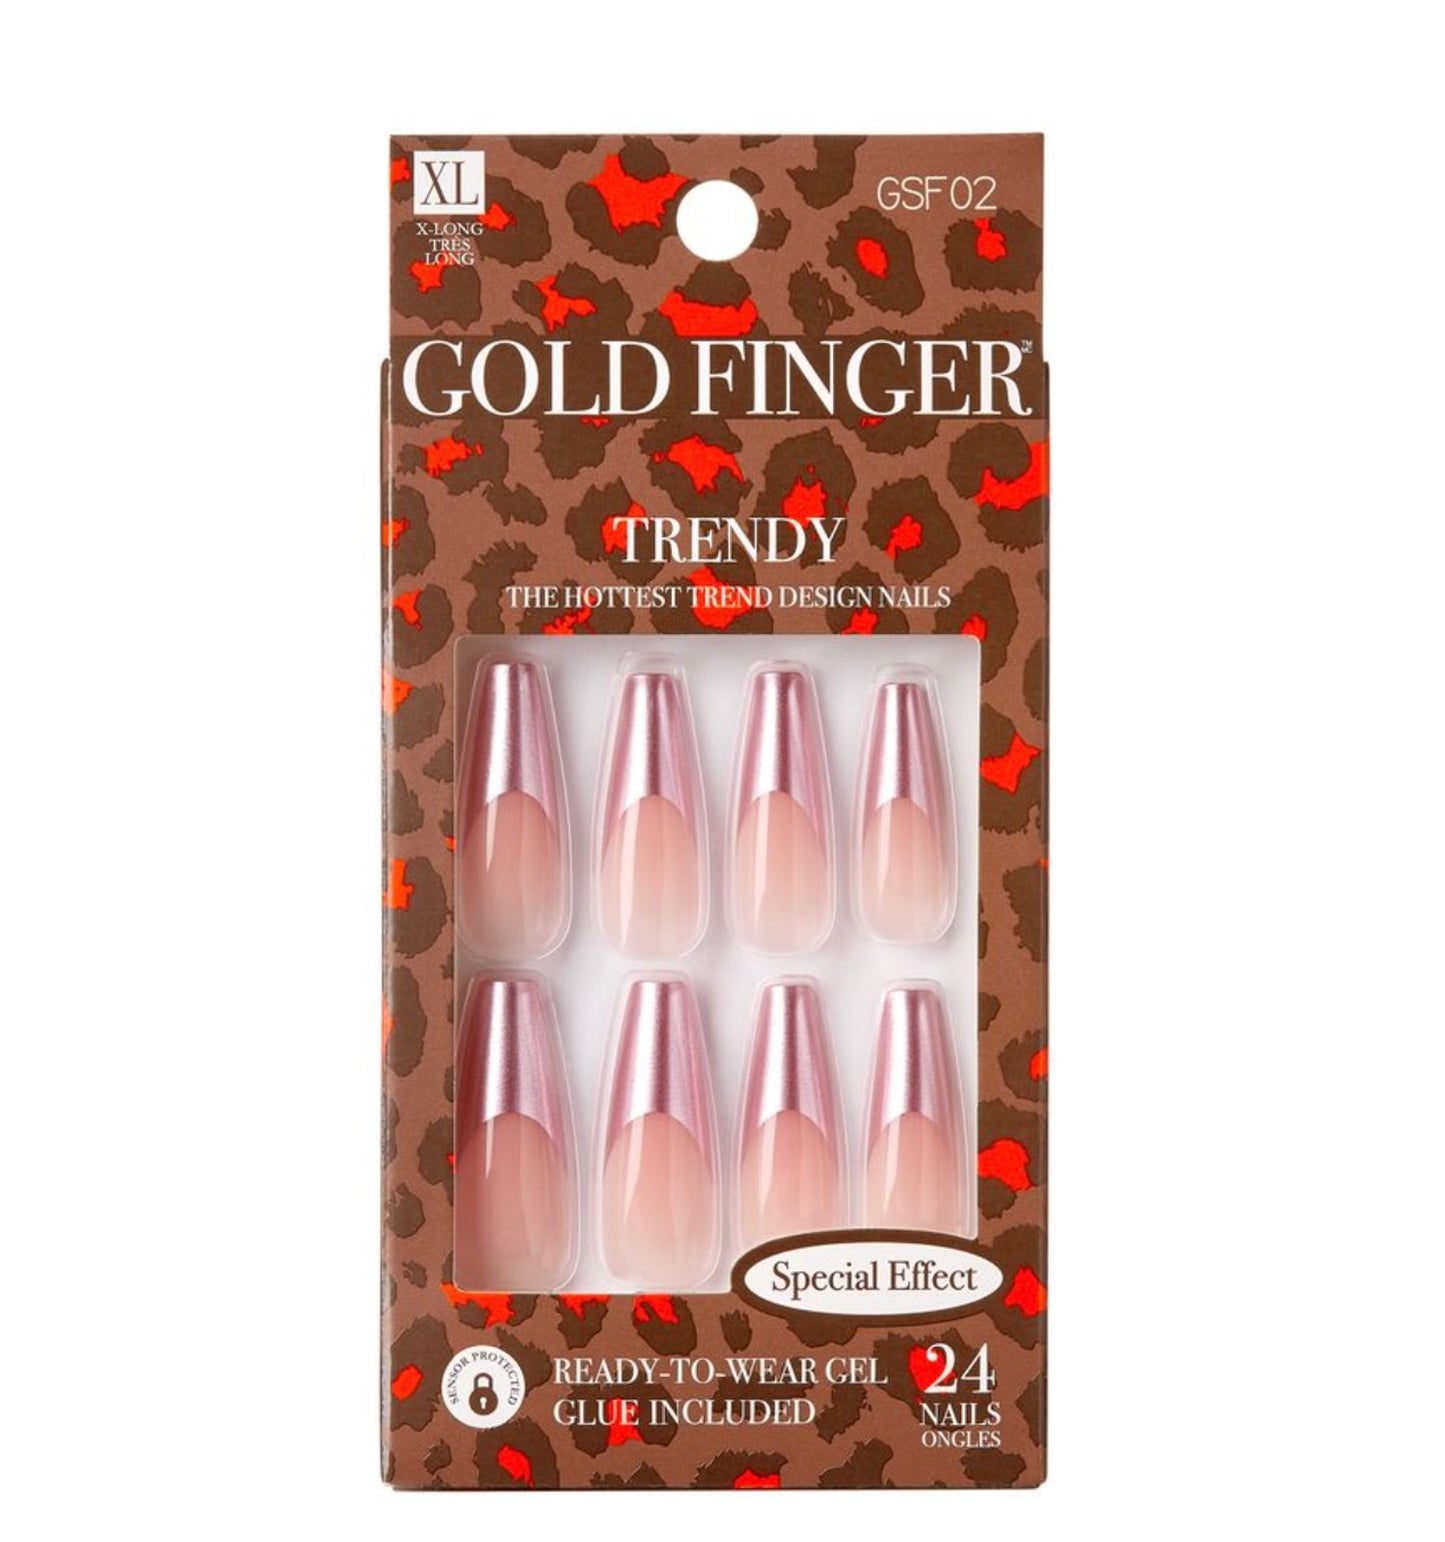 KISS Gel Gold Finger Trendy Nails